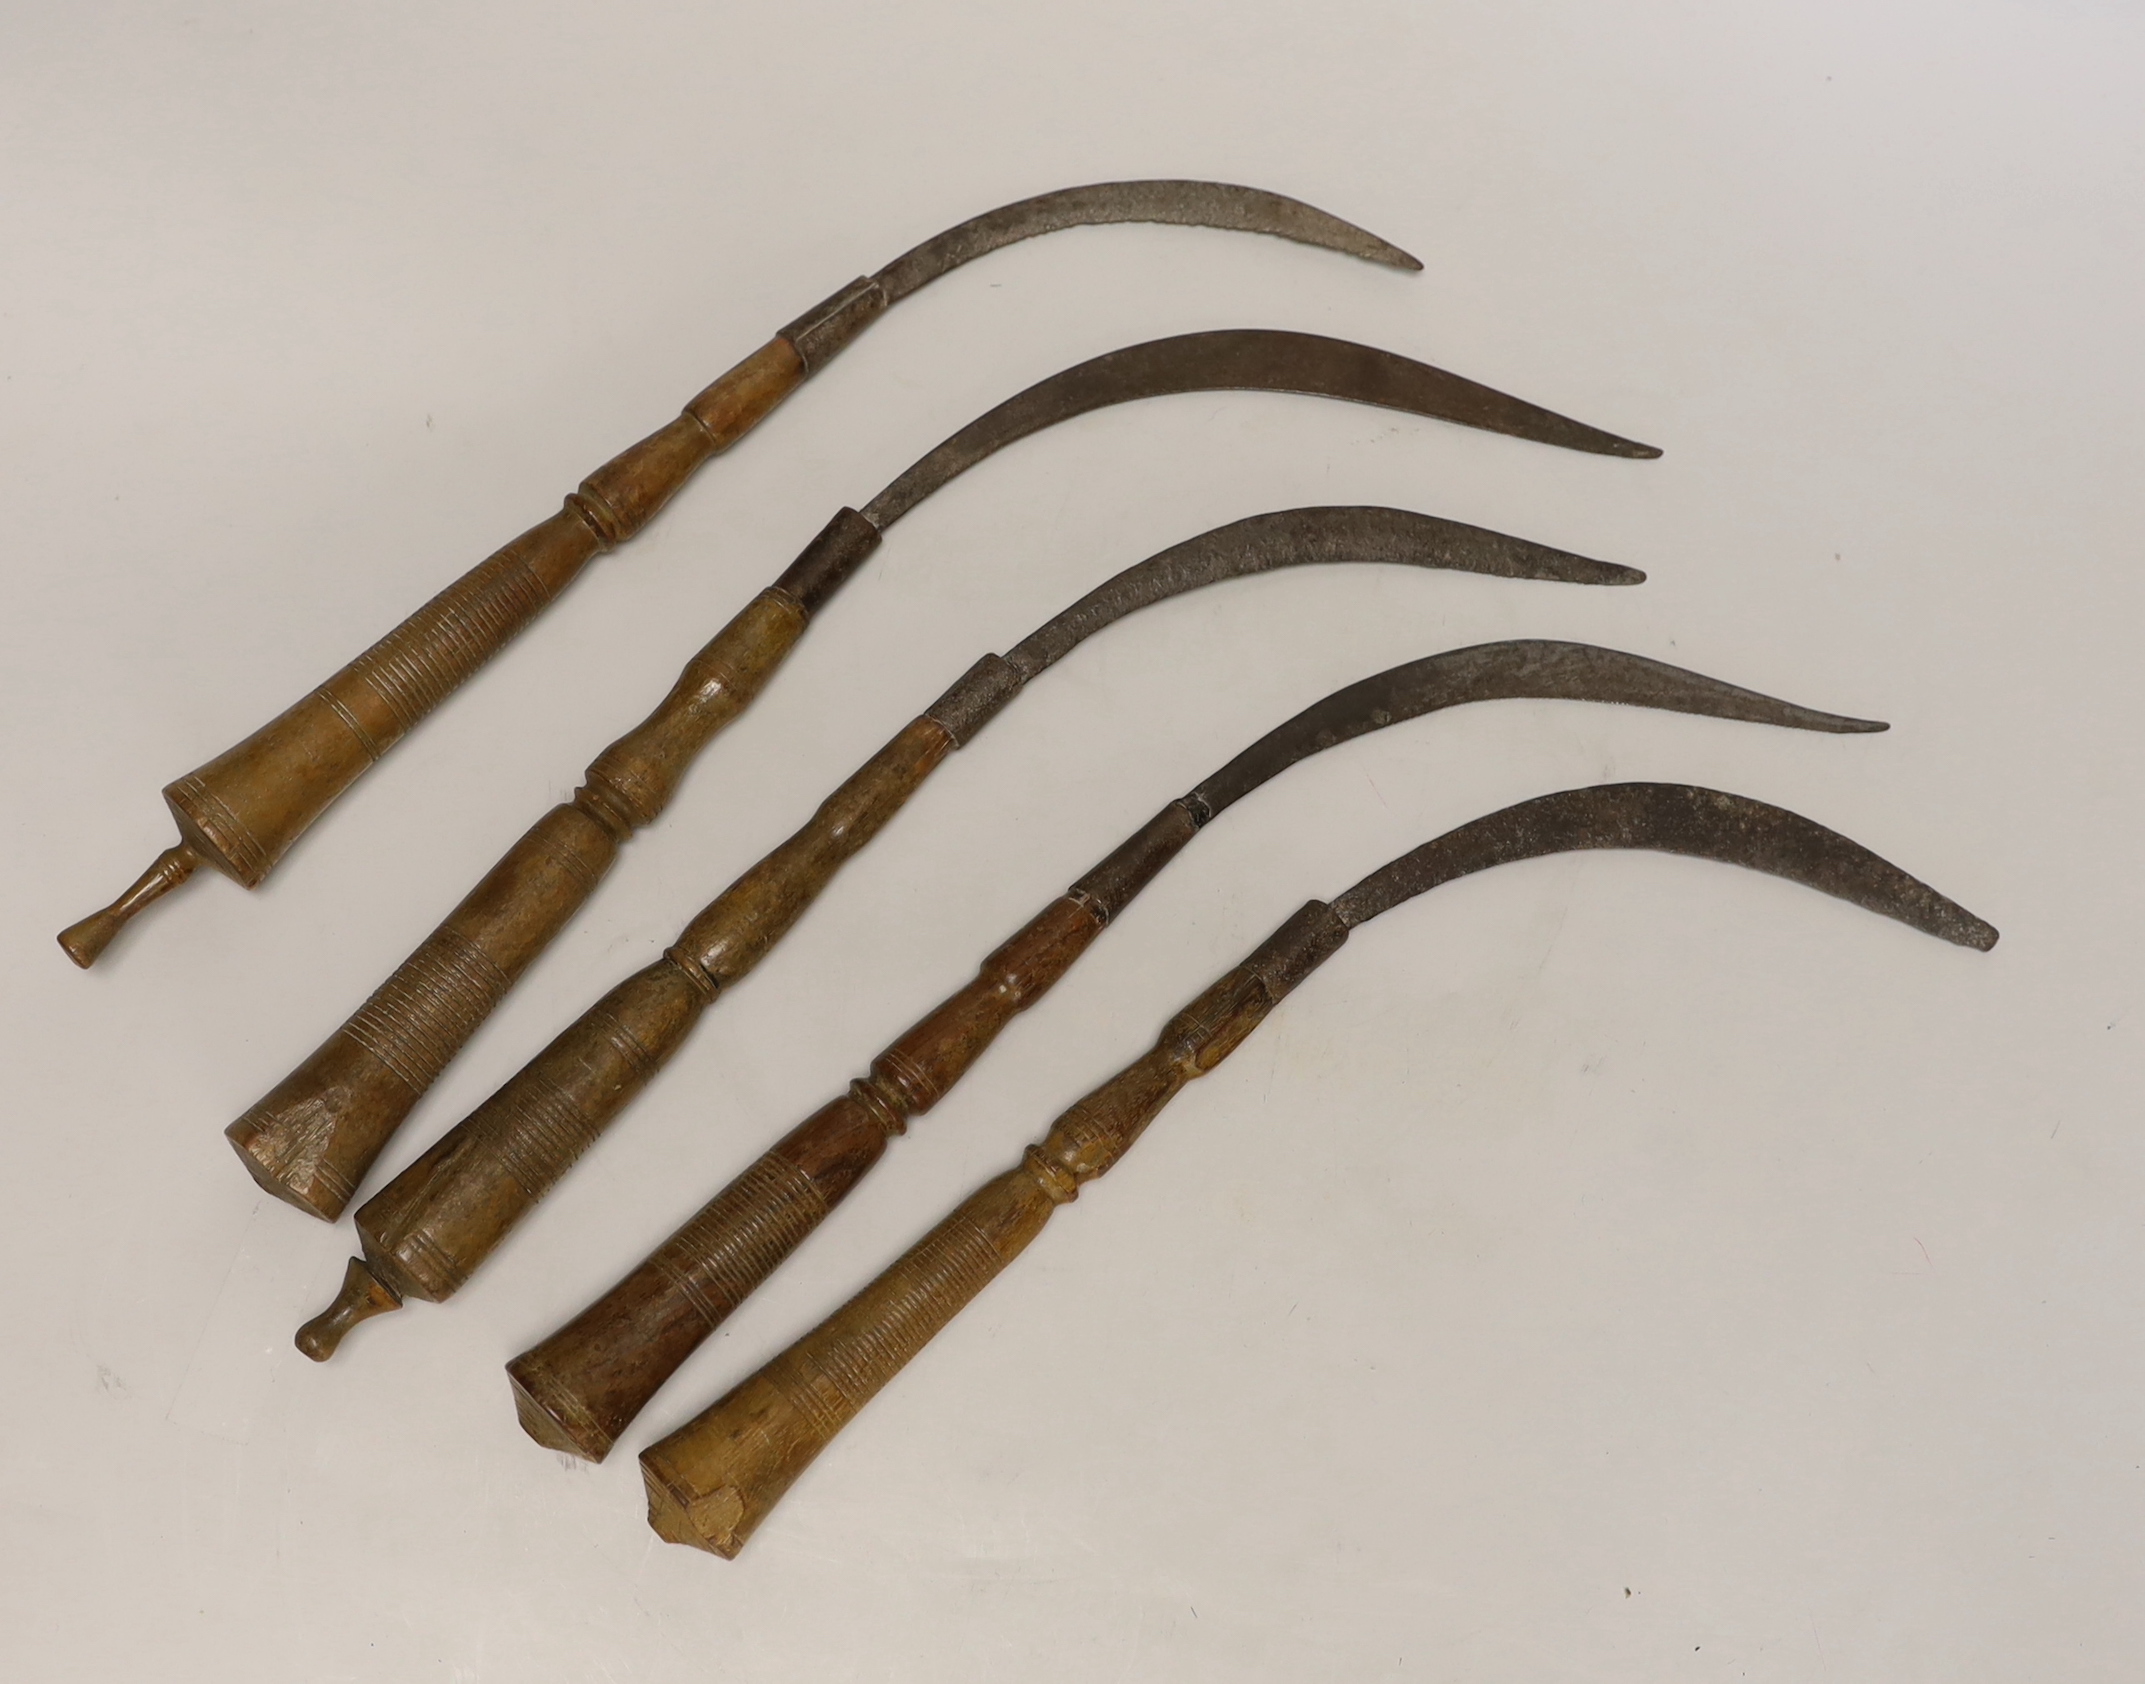 Five 19th century steel turnip hooks with turned wood handles, longest 38cm long